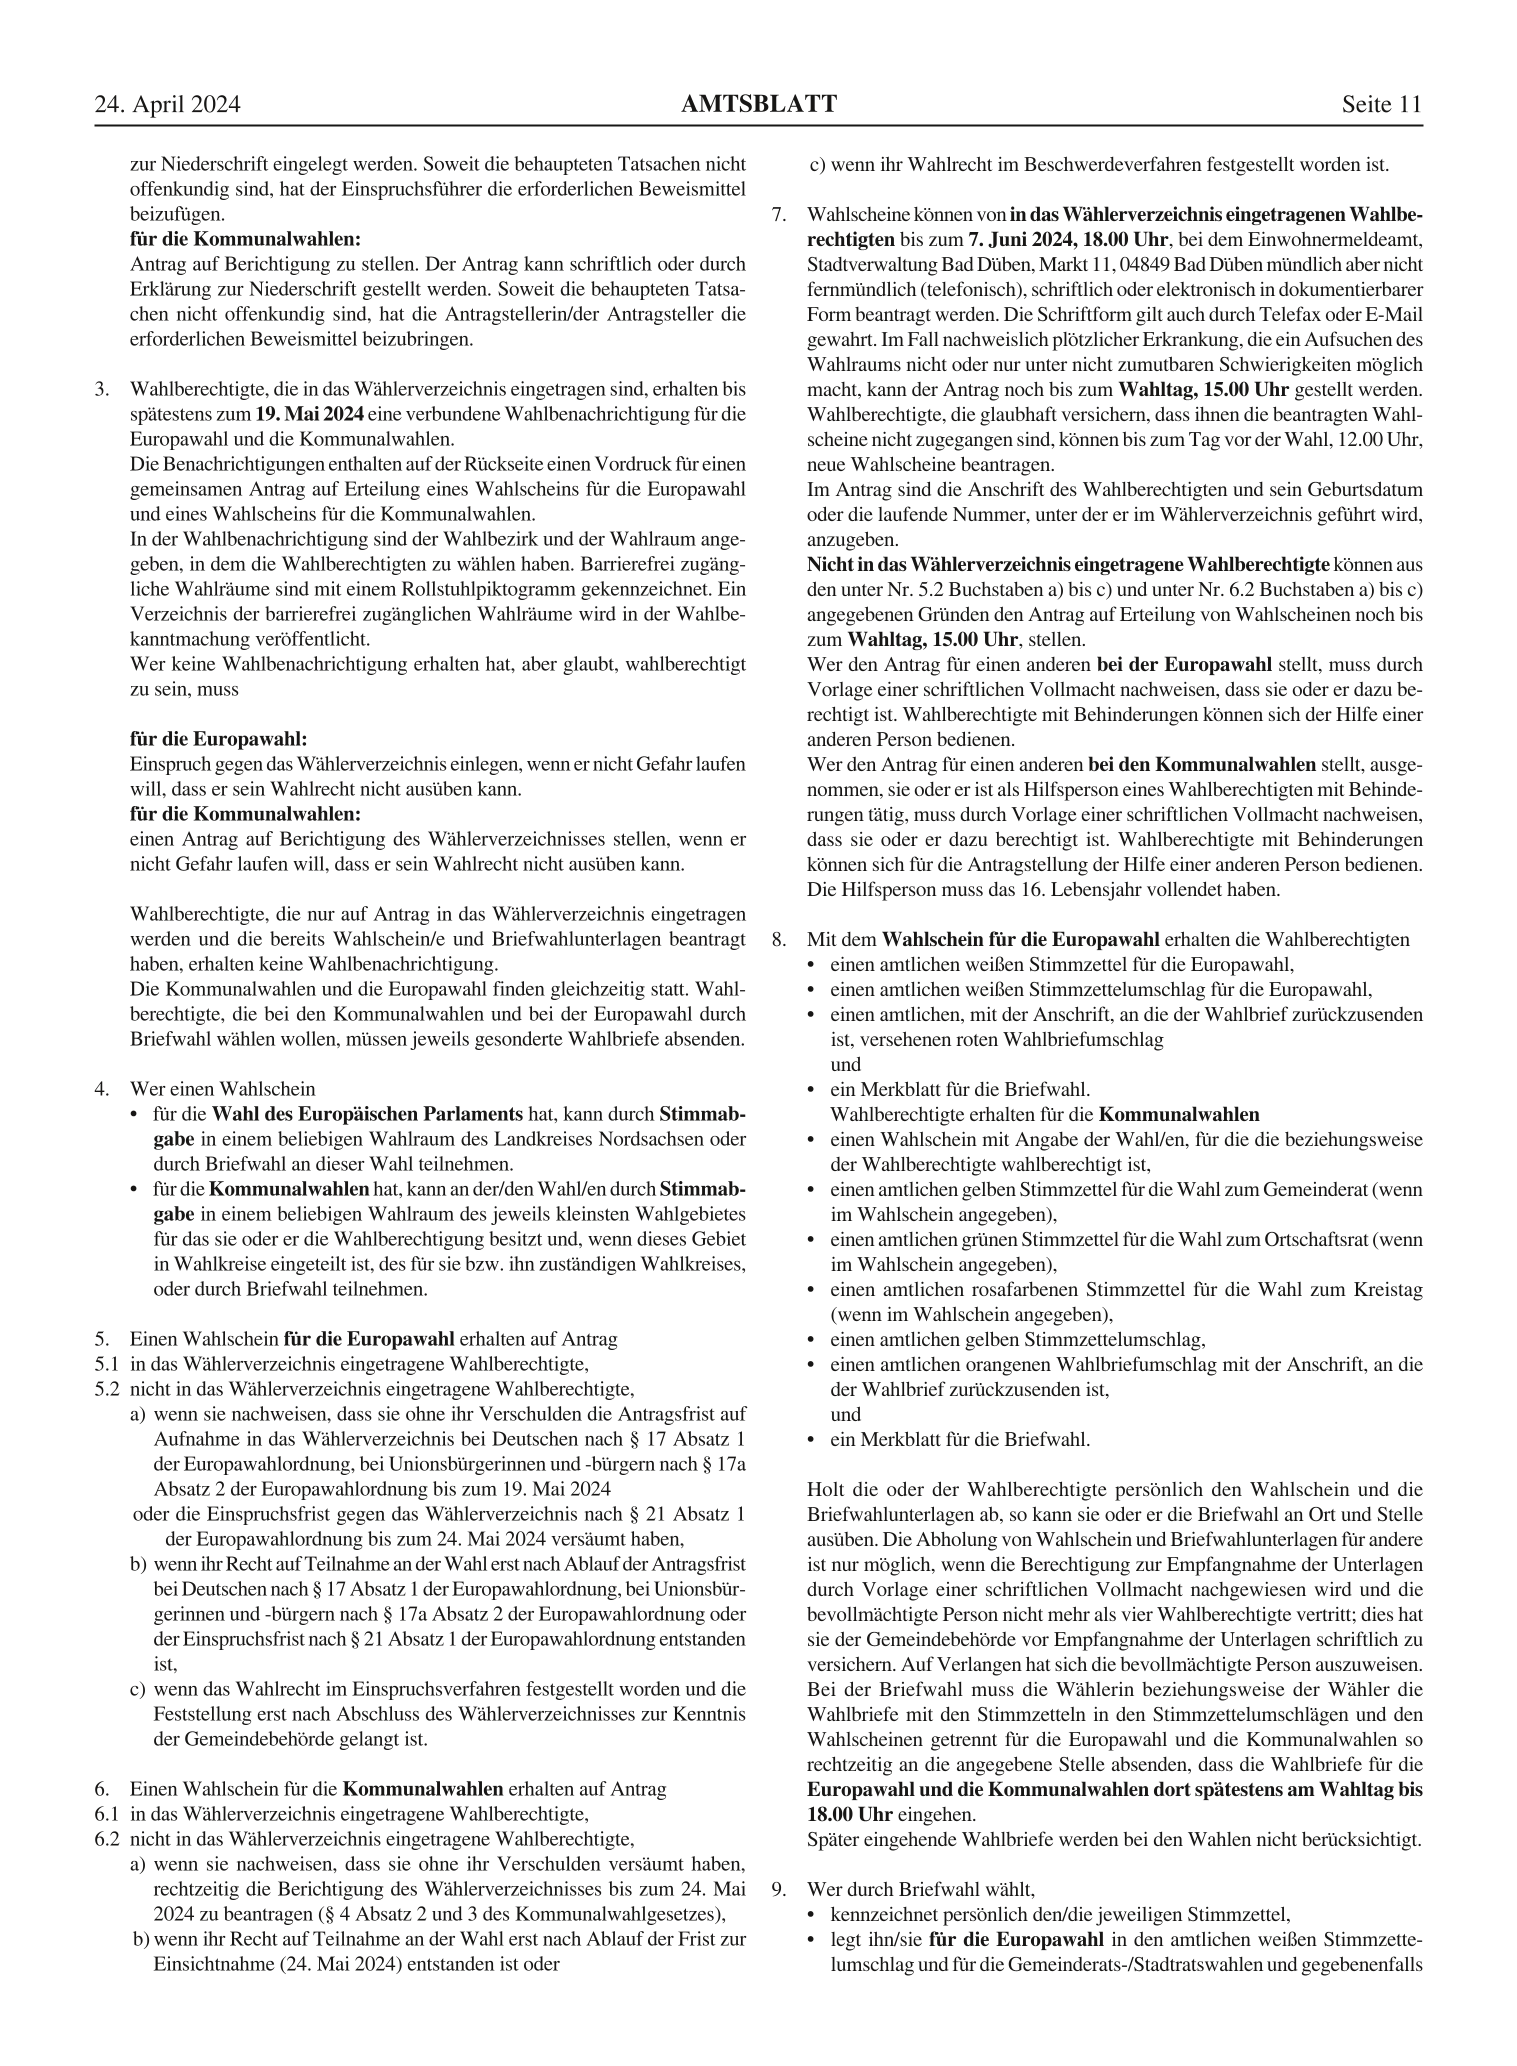 Amtsblatt Nr. 05/2024 vom 24.04.2024 Seite 3